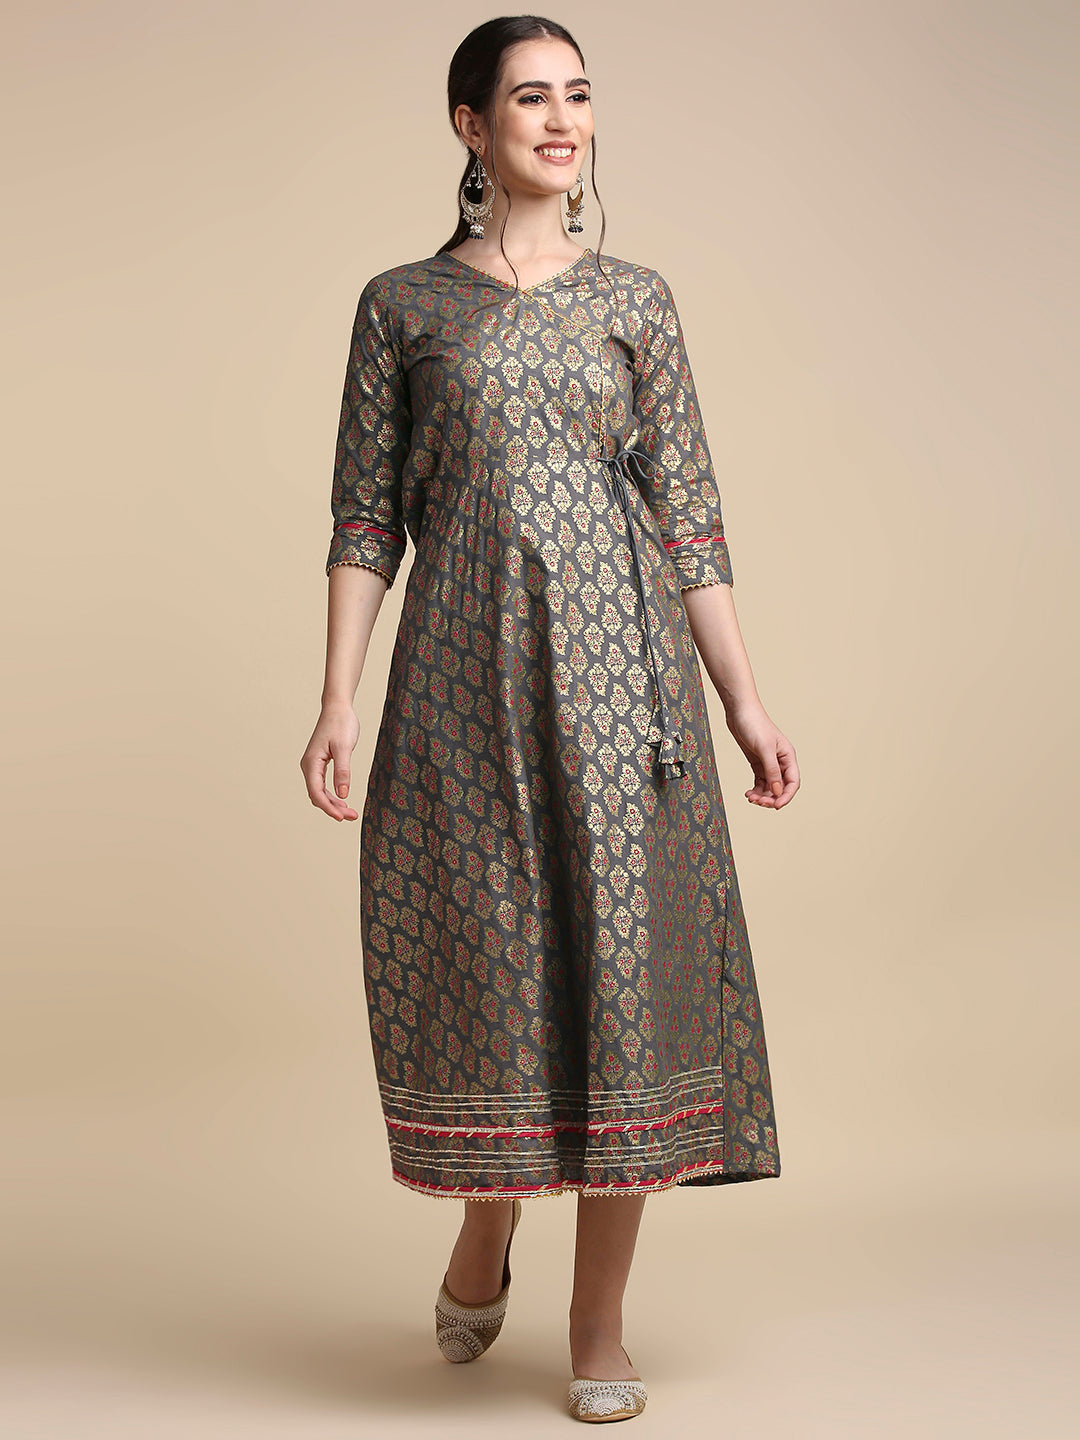 Women's's Grey Ethnic Motifs Ethnic A-Line Maxi Dress